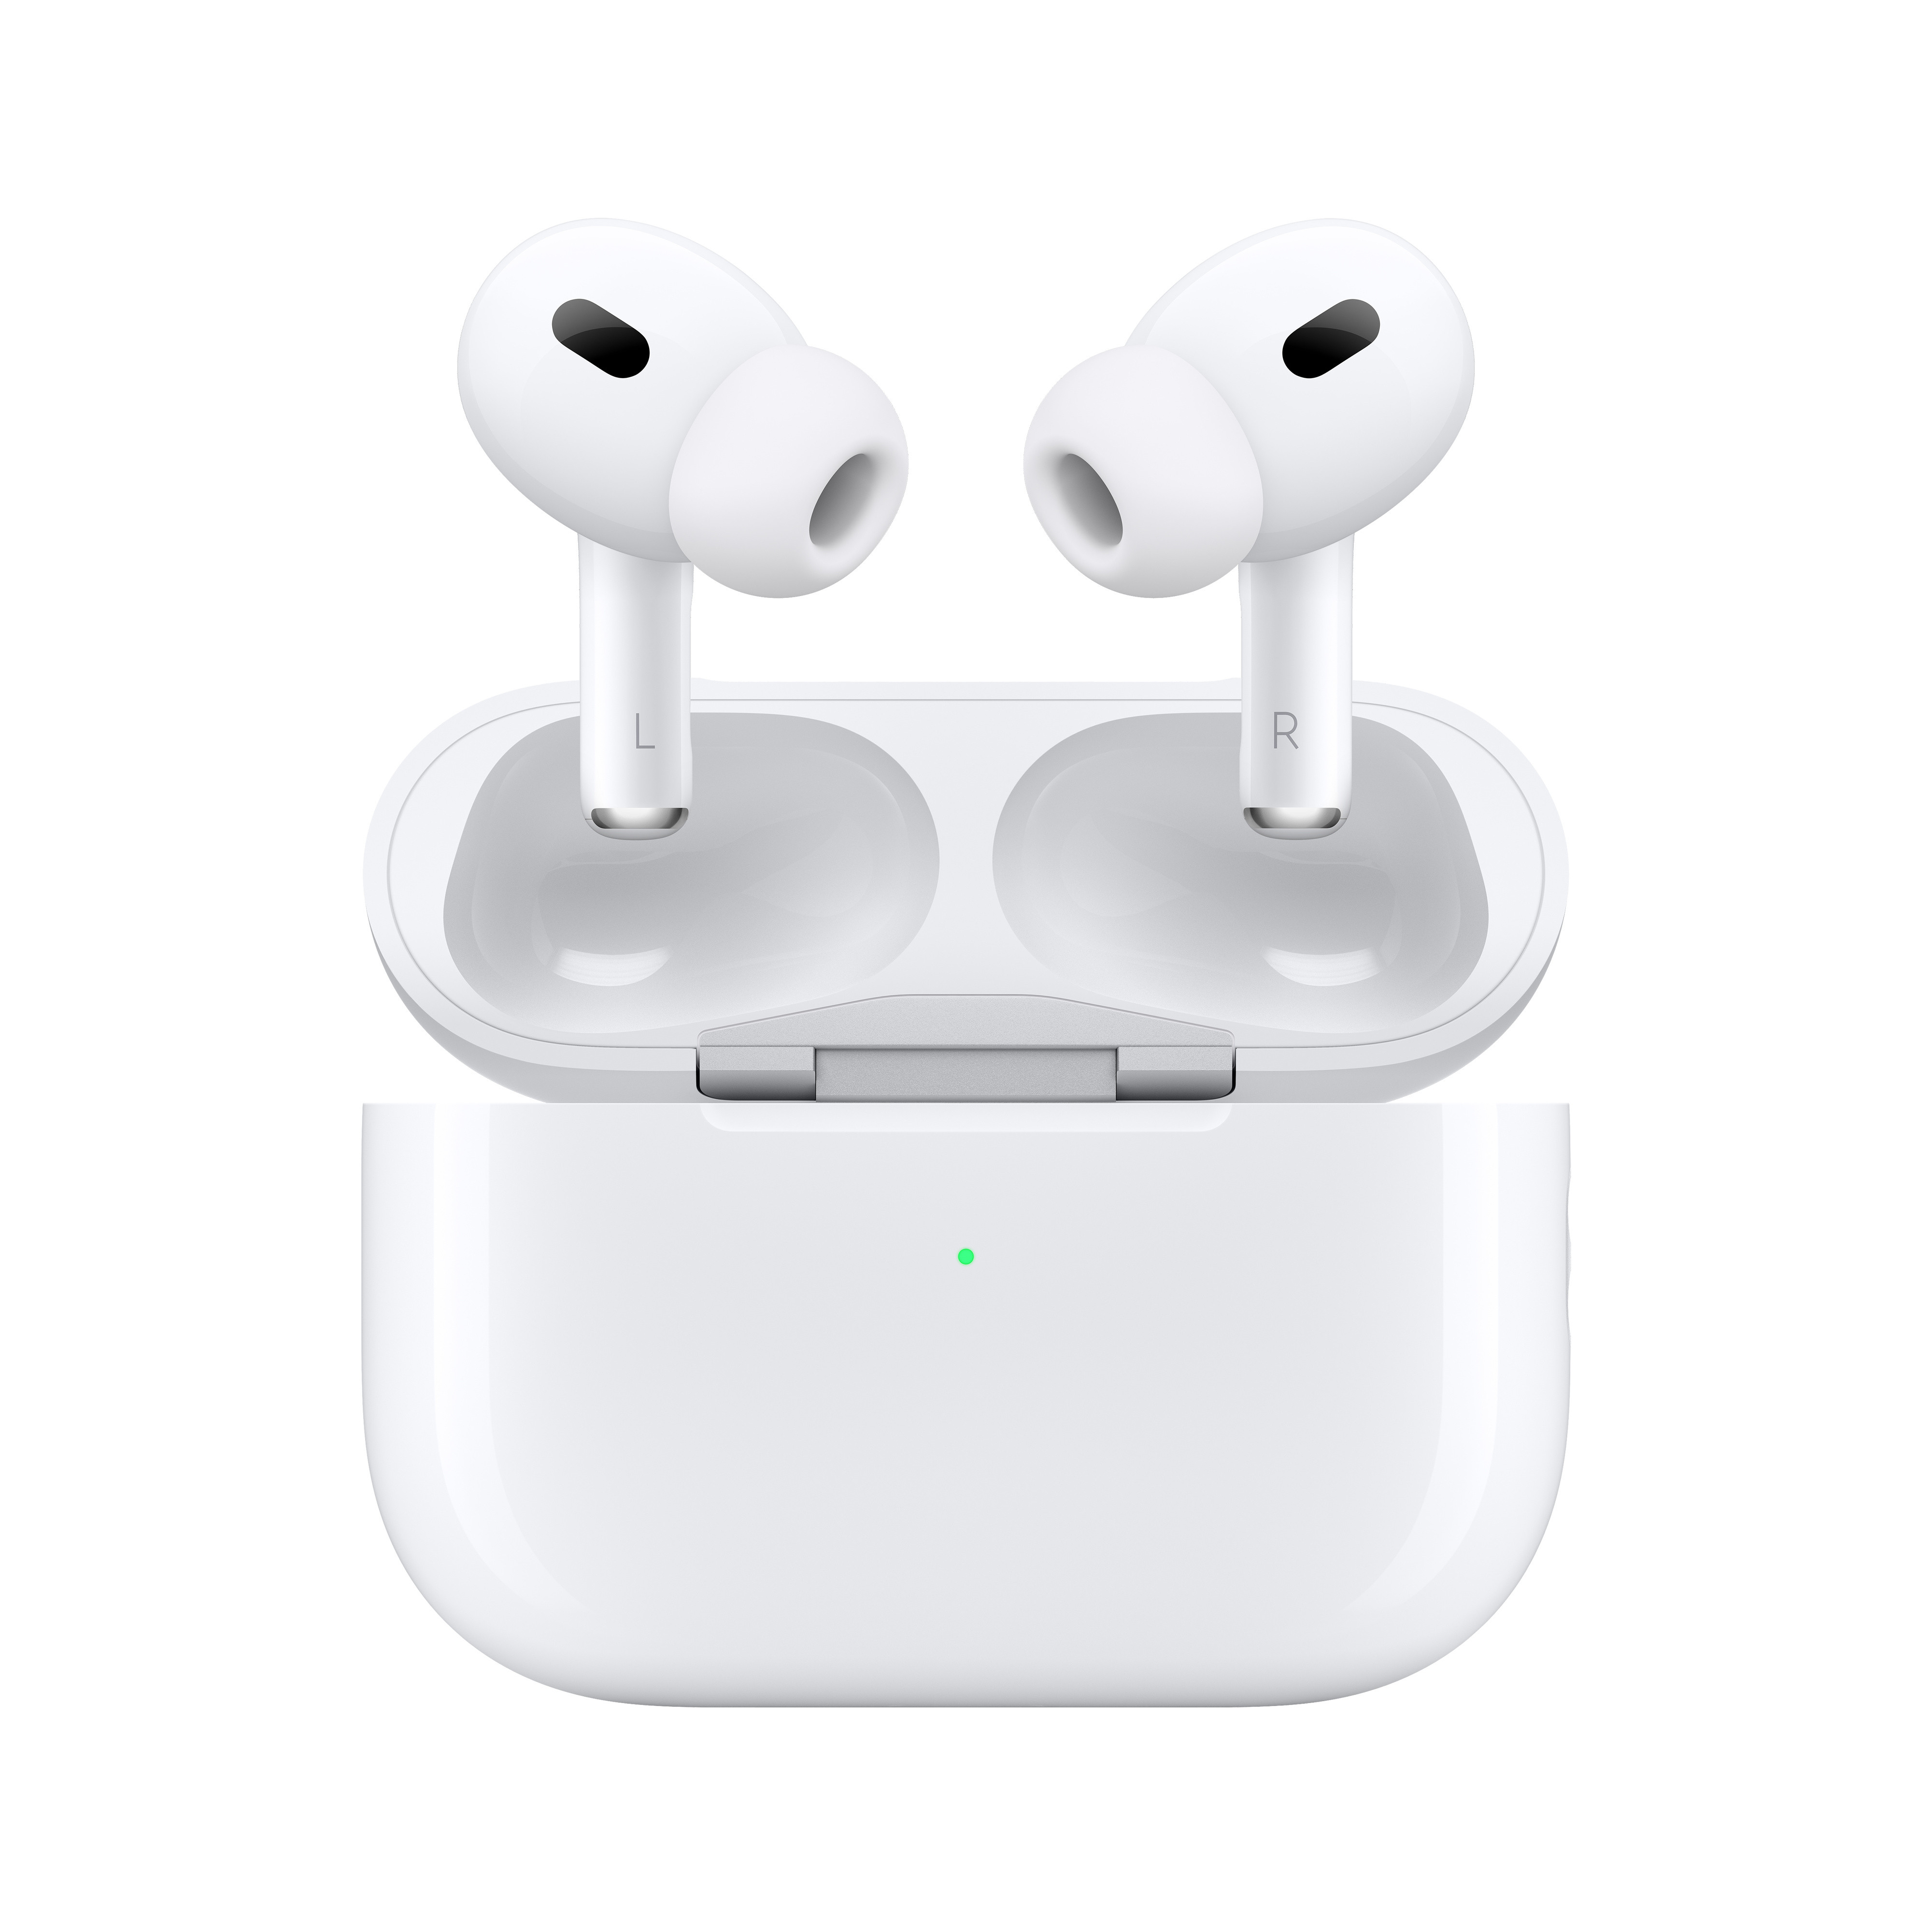 Apple MQD83ZM AirPods Pro Seconda Generazione Auricolari Cuffie Wireless In-ear Musica e Chiamate Bluetooth Bianco